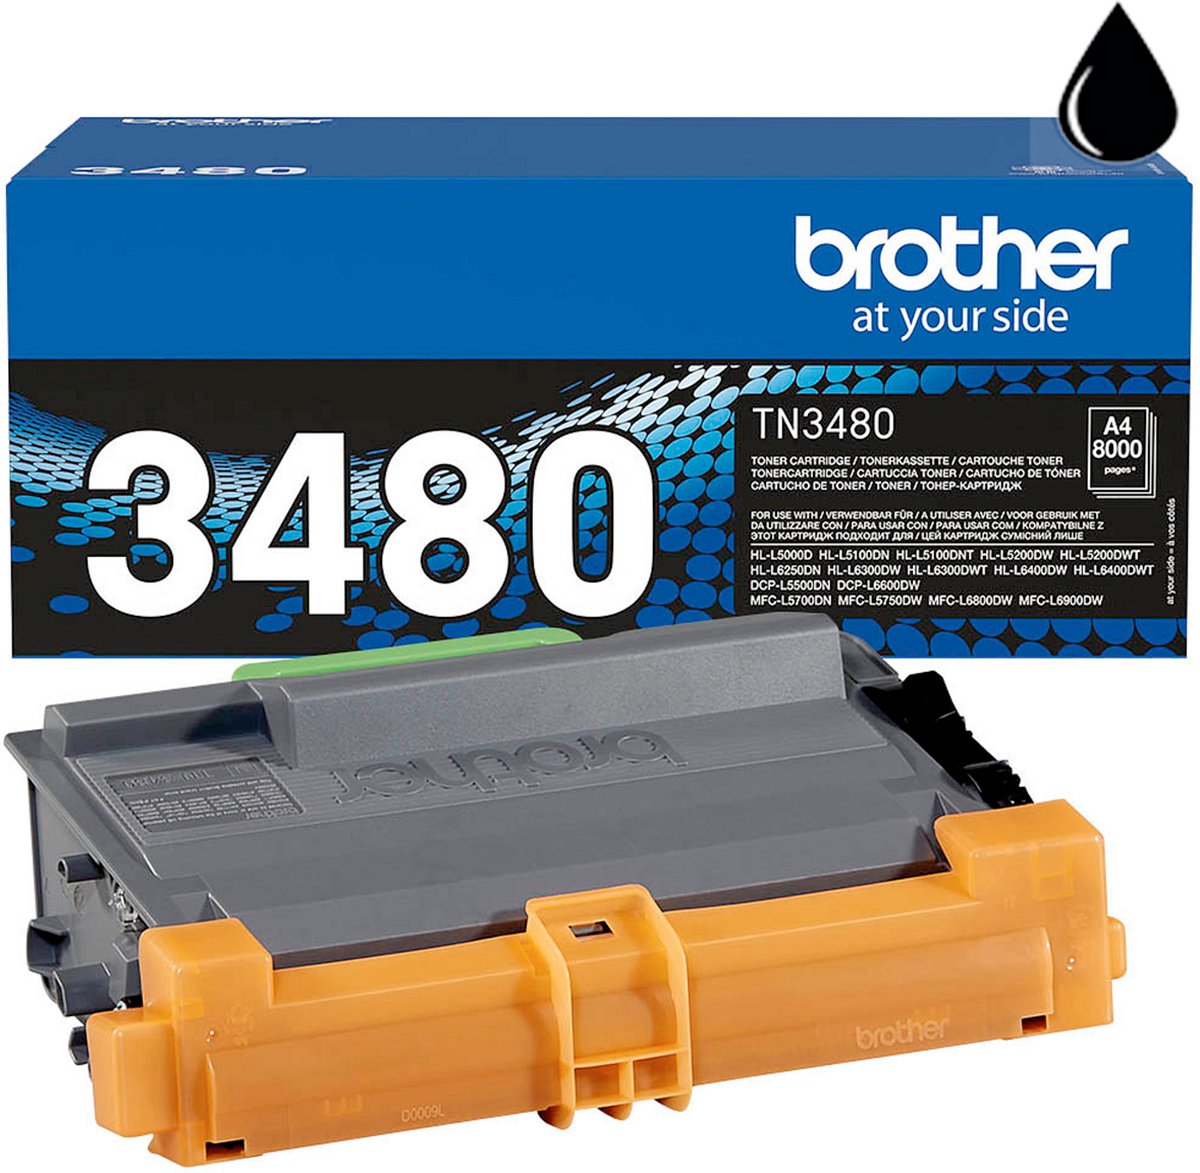 1x Toner for Brother DCP-L 5500 6600 DW DN, TN3480 TN-3480 BLACK